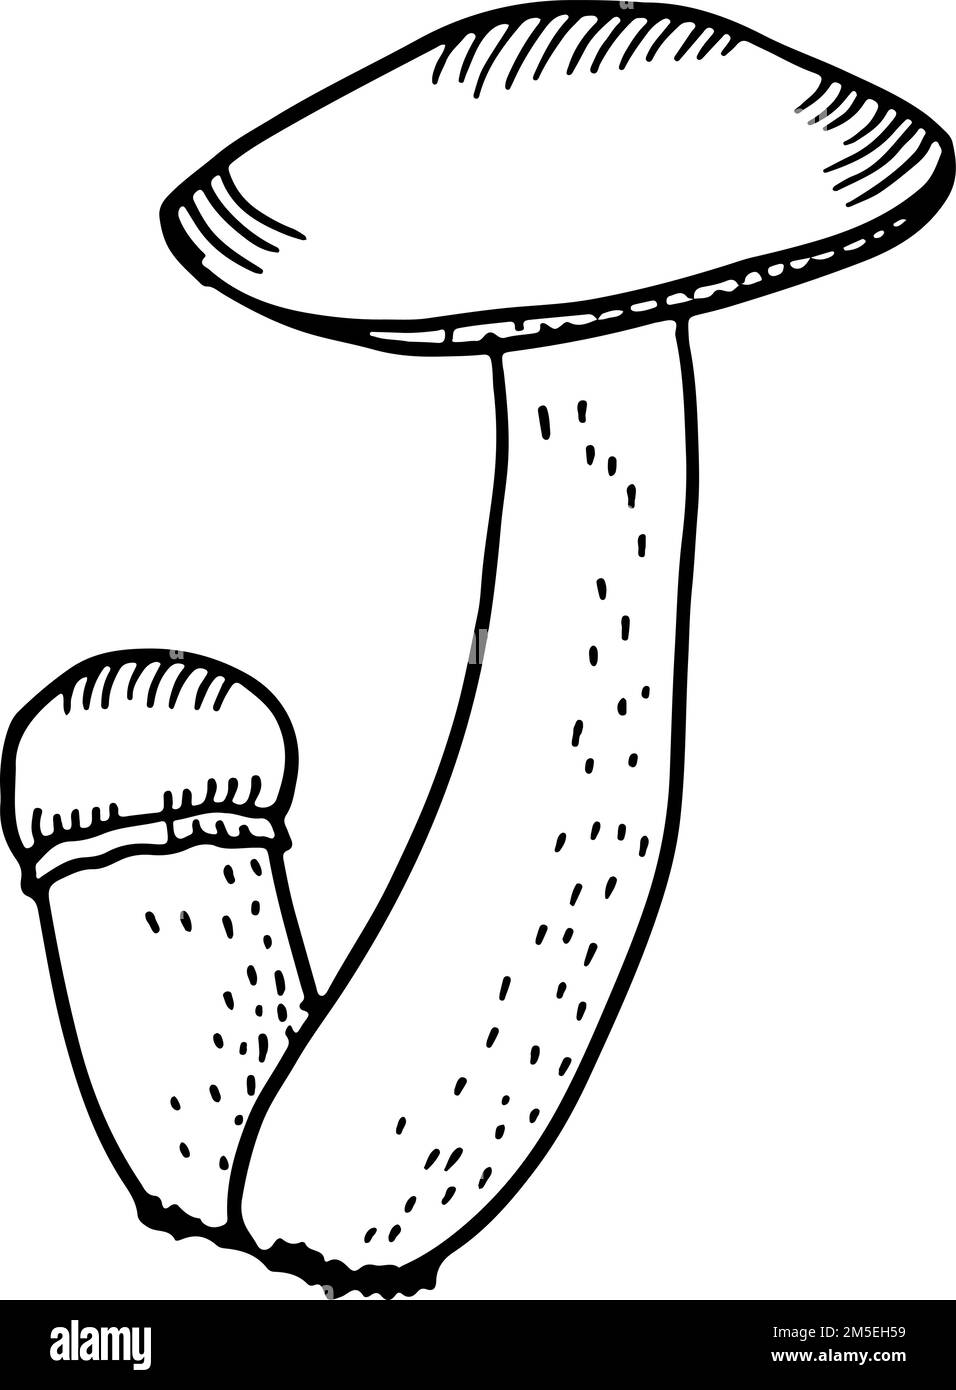 Toadstool sketch. Toxic poisonous mushroom. Fungus illustration Stock Vector